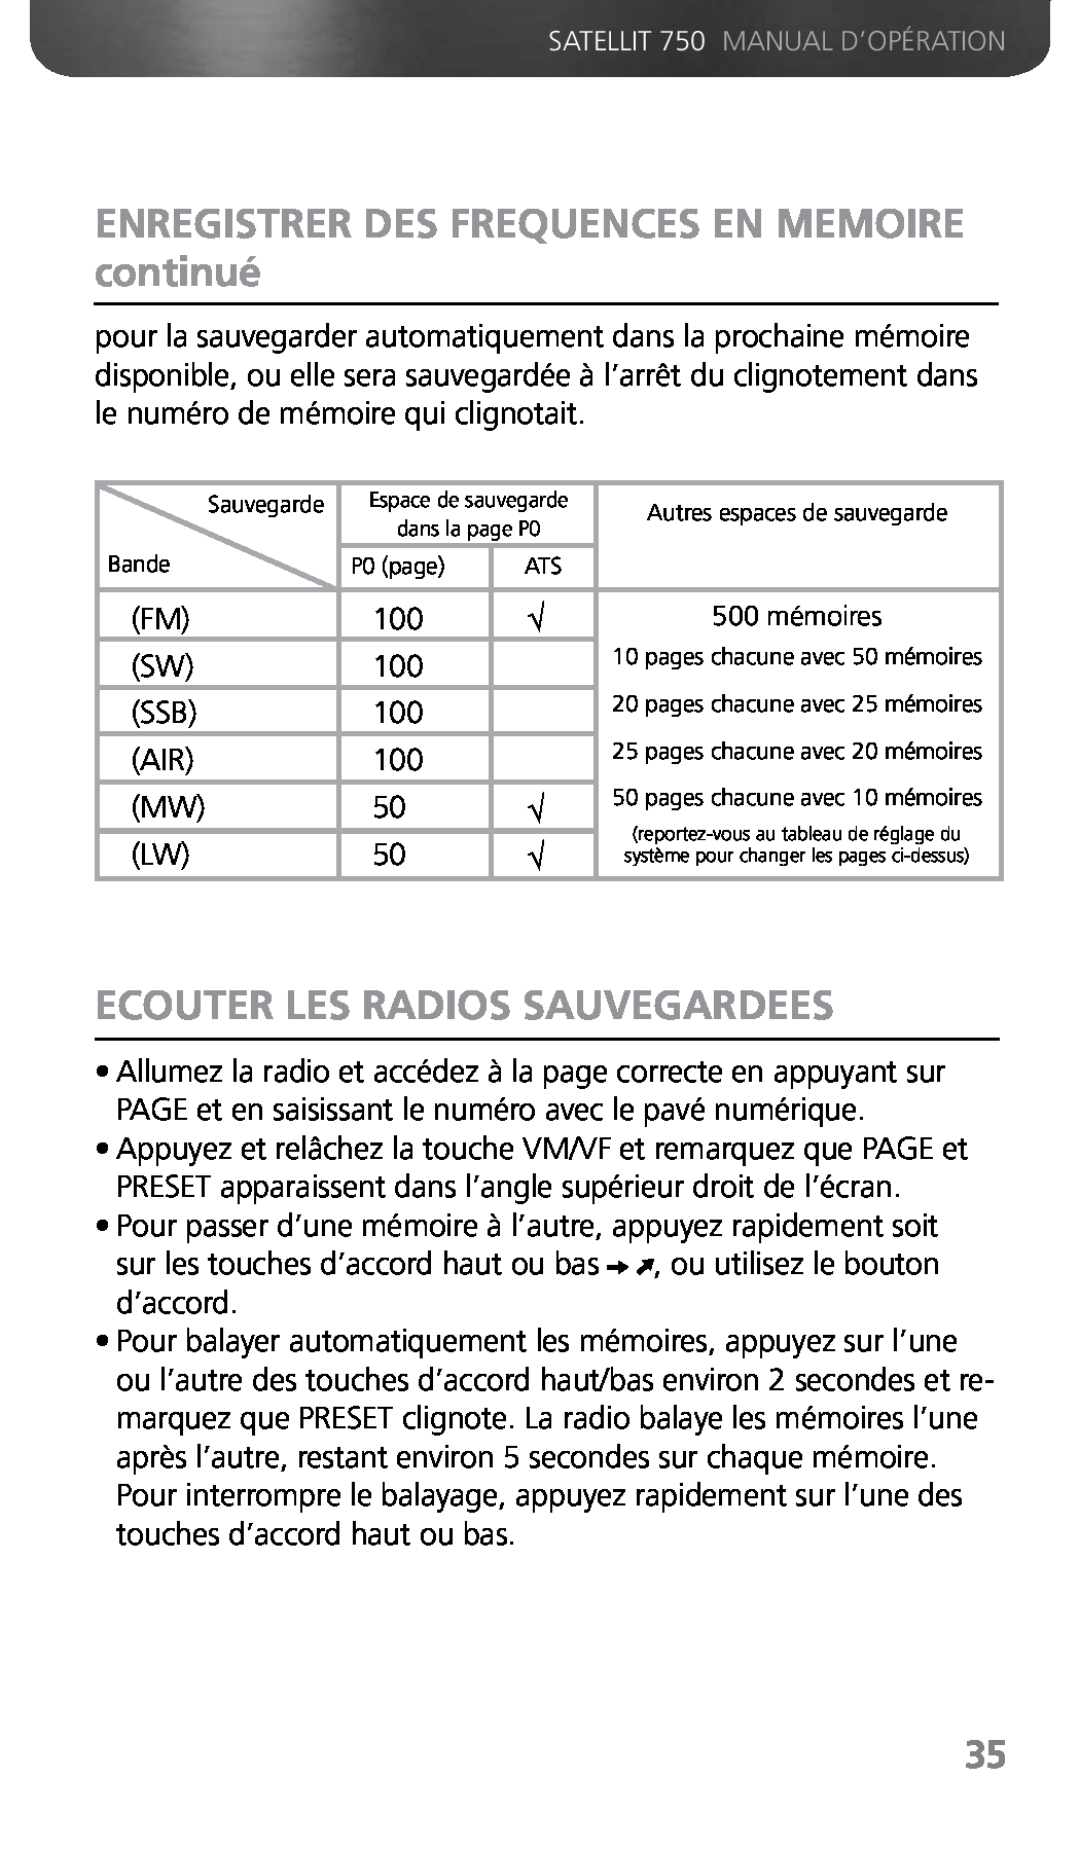 Grundig 750 owner manual ENREGISTRER DES FREQUENCES EN MEMOIRE continué, Ecouter Les Radios Sauvegardees 